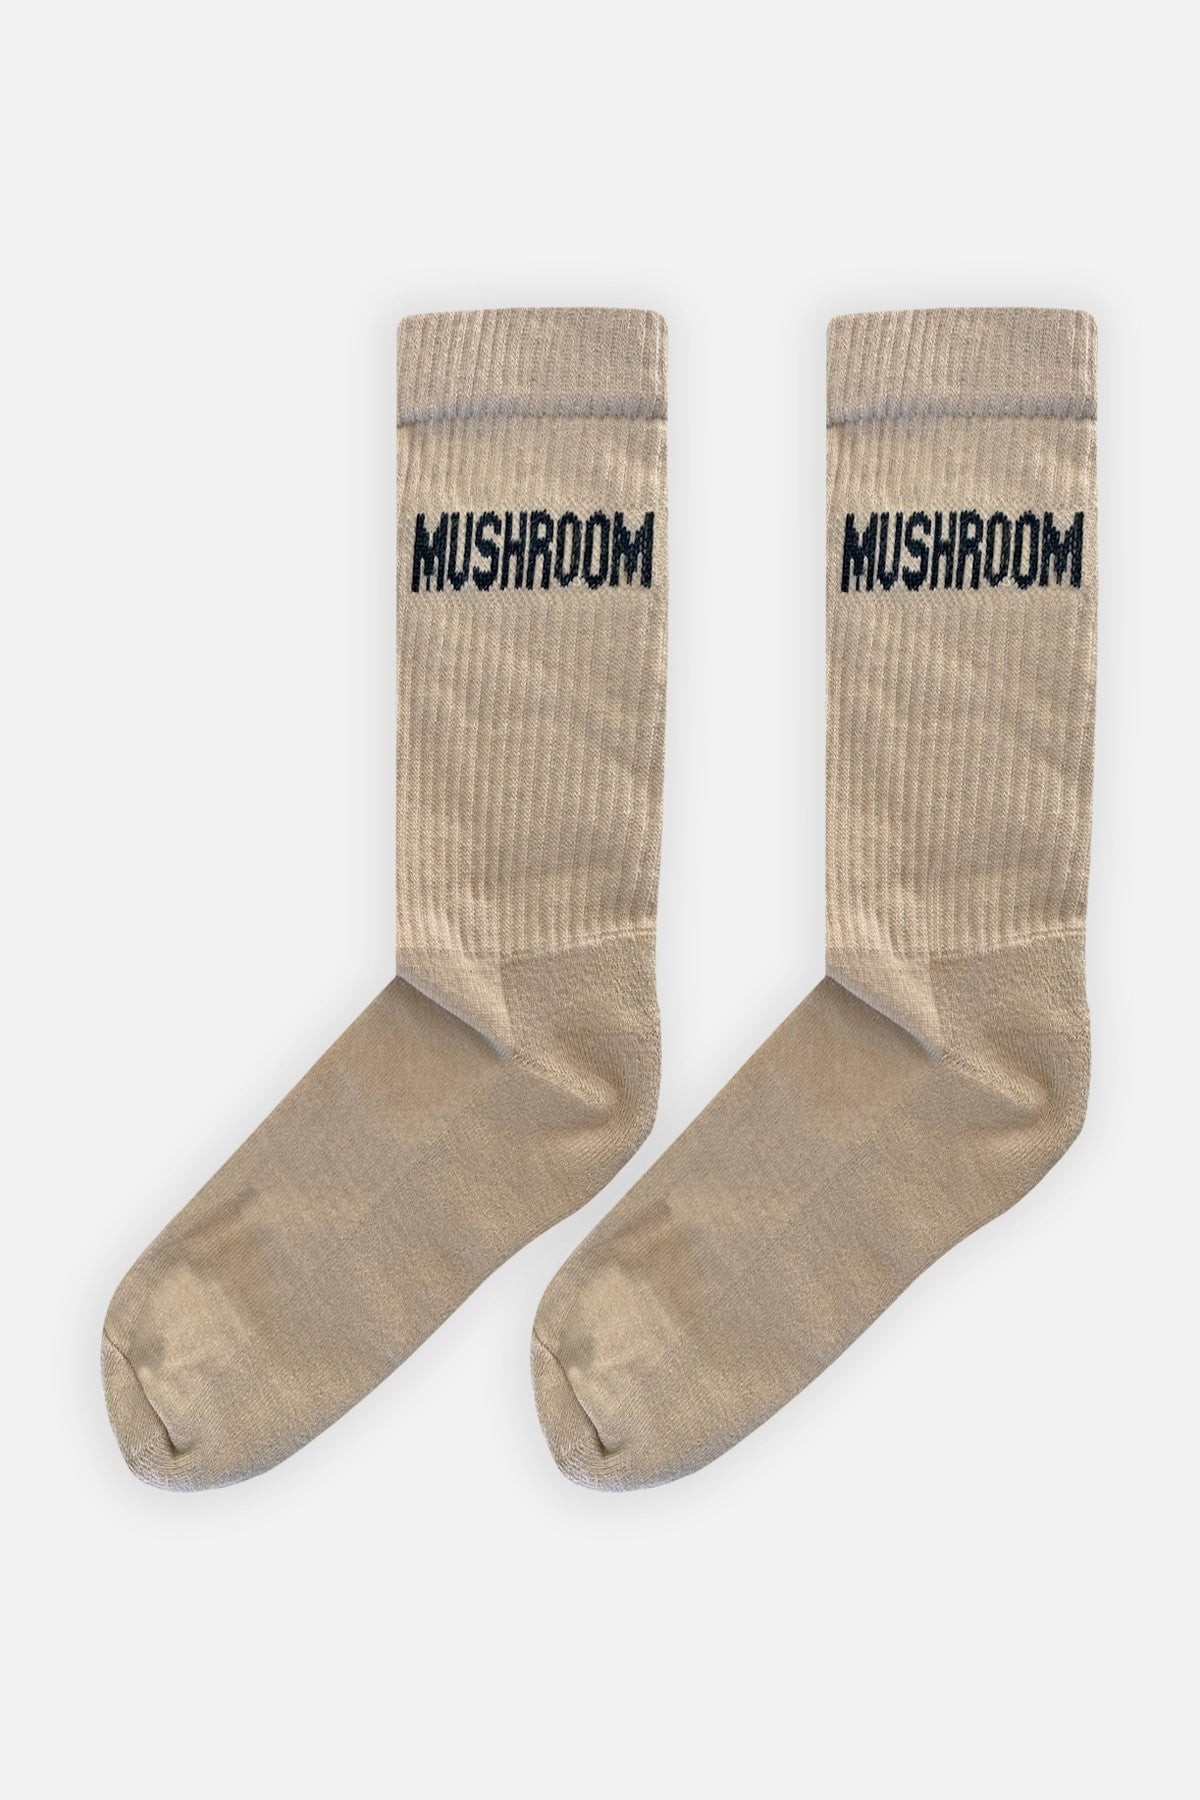 Mushroom Apparel ''The Dust Bowl'' Socks